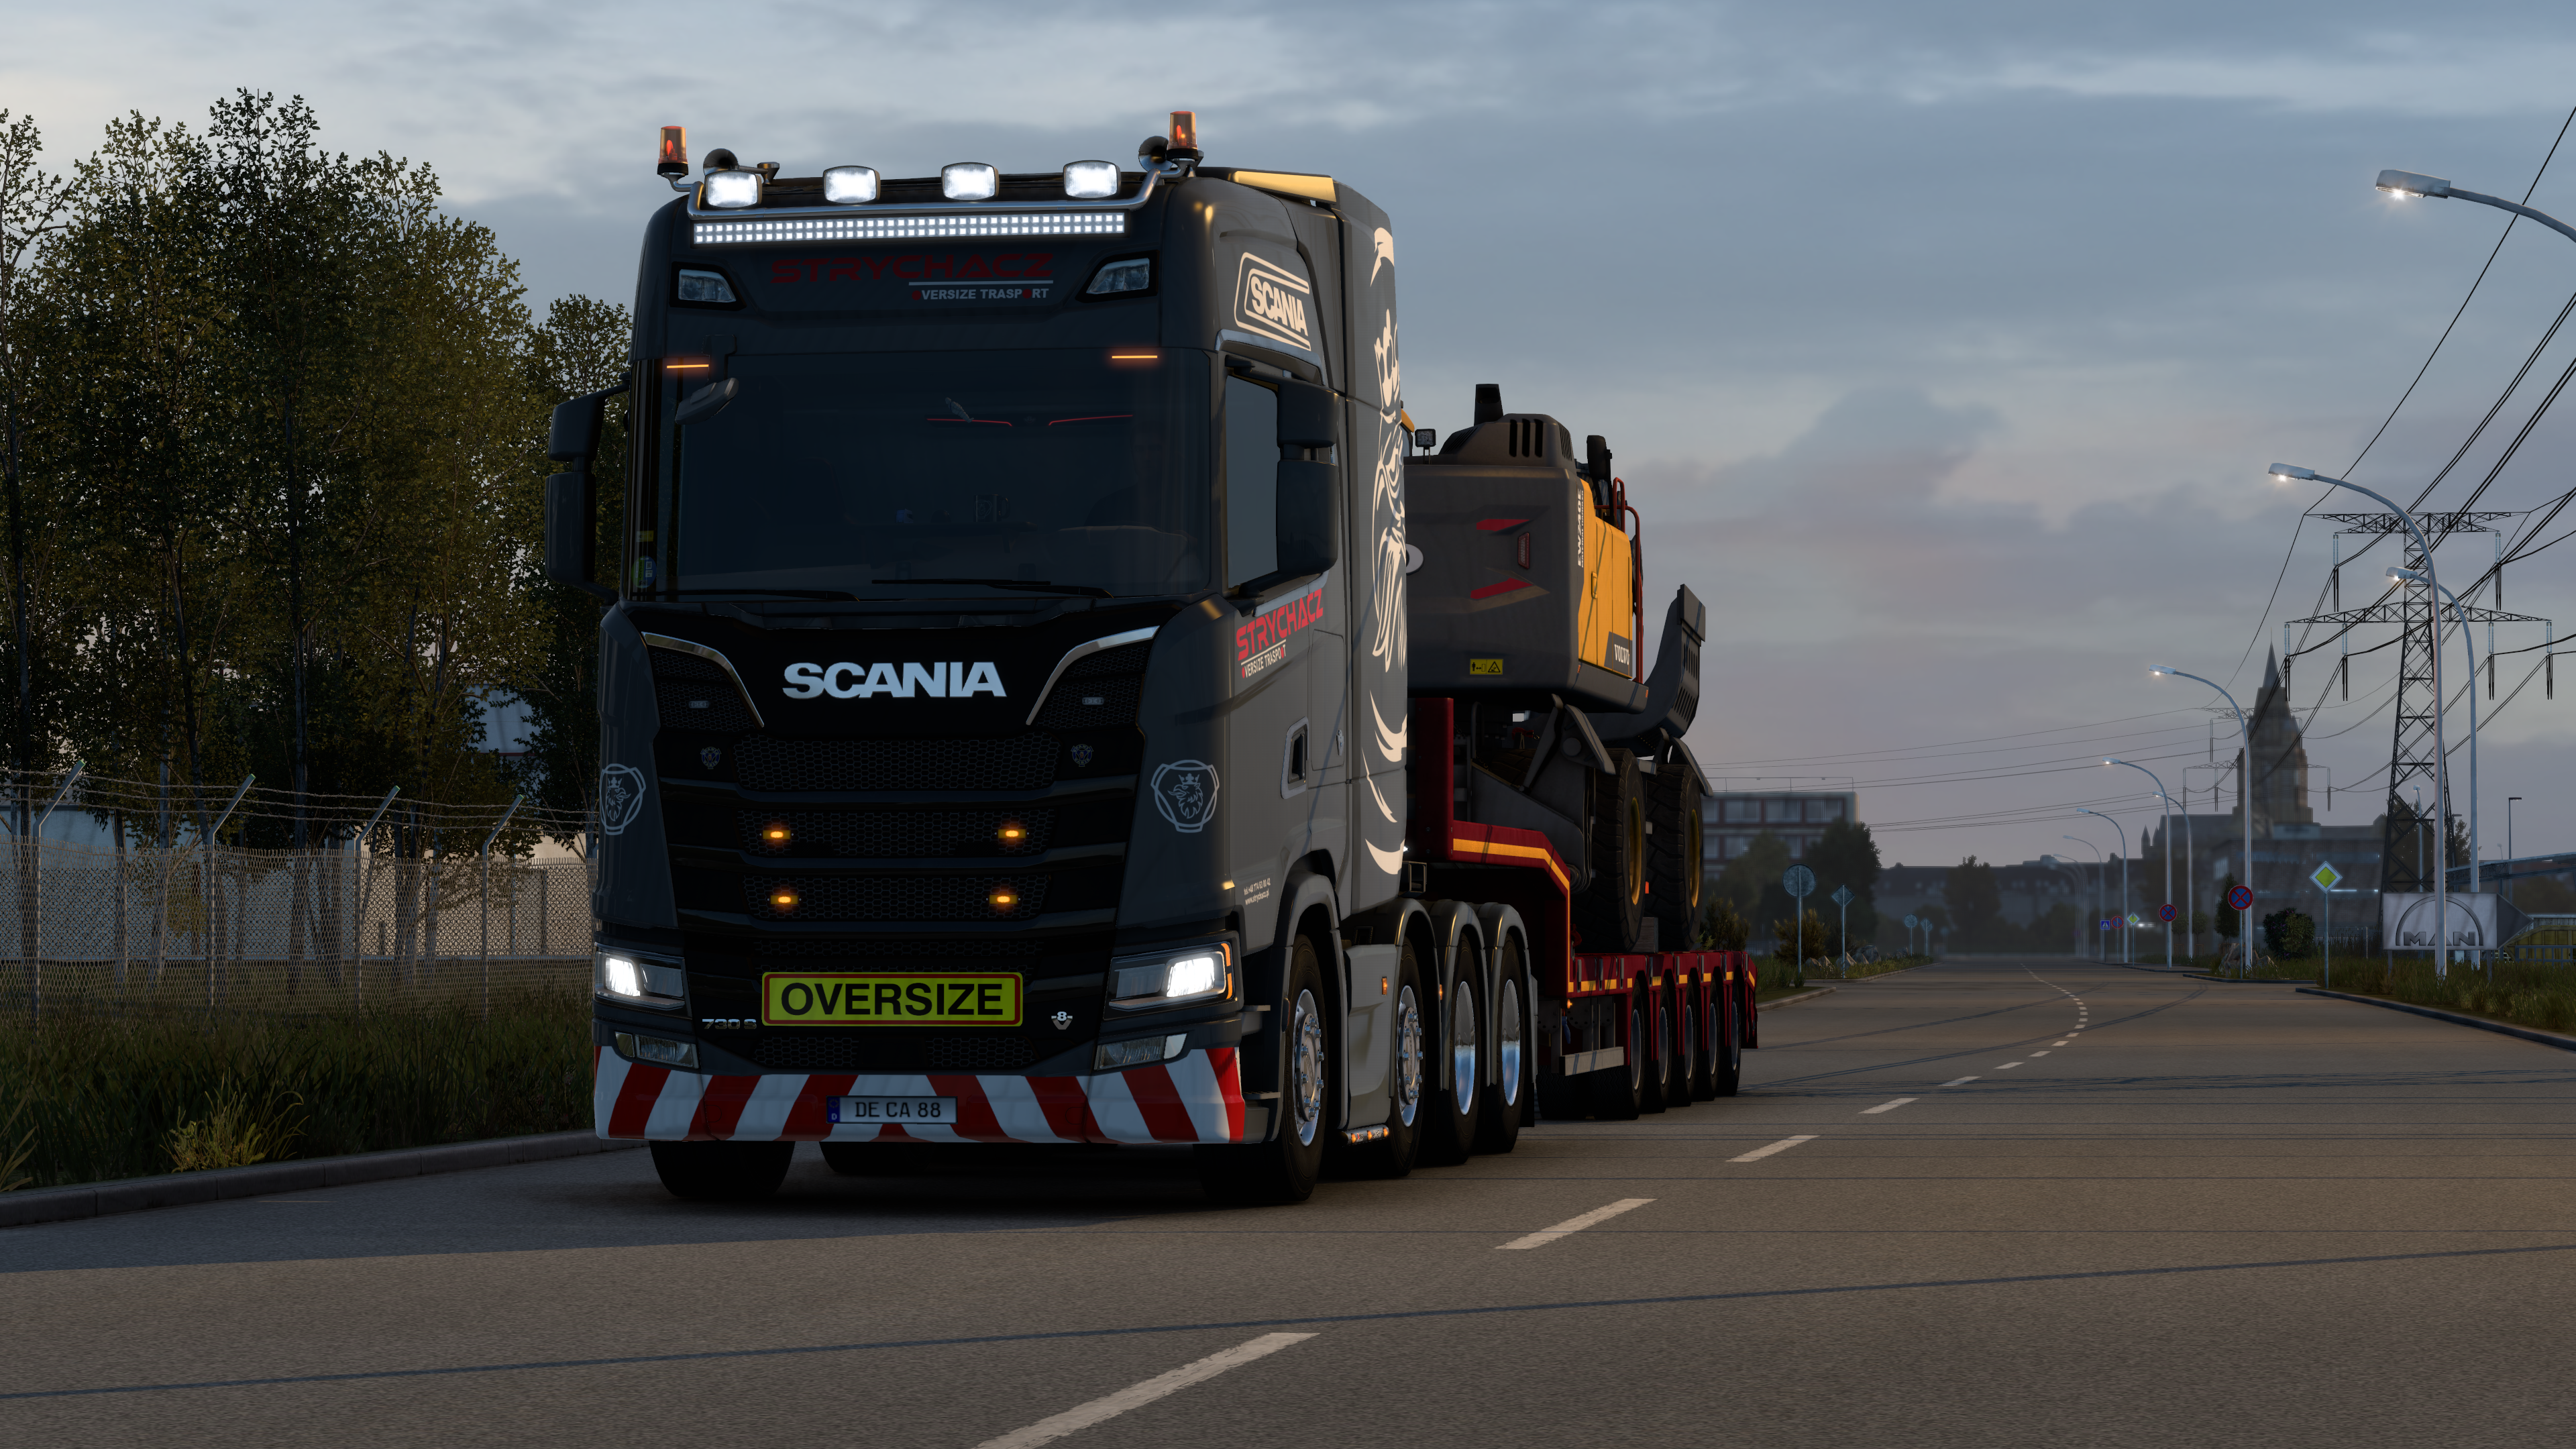 General 3840x2160 Scania truck Euro Truck Simulator 2 video games CGI street light sky clouds frontal view headlights road